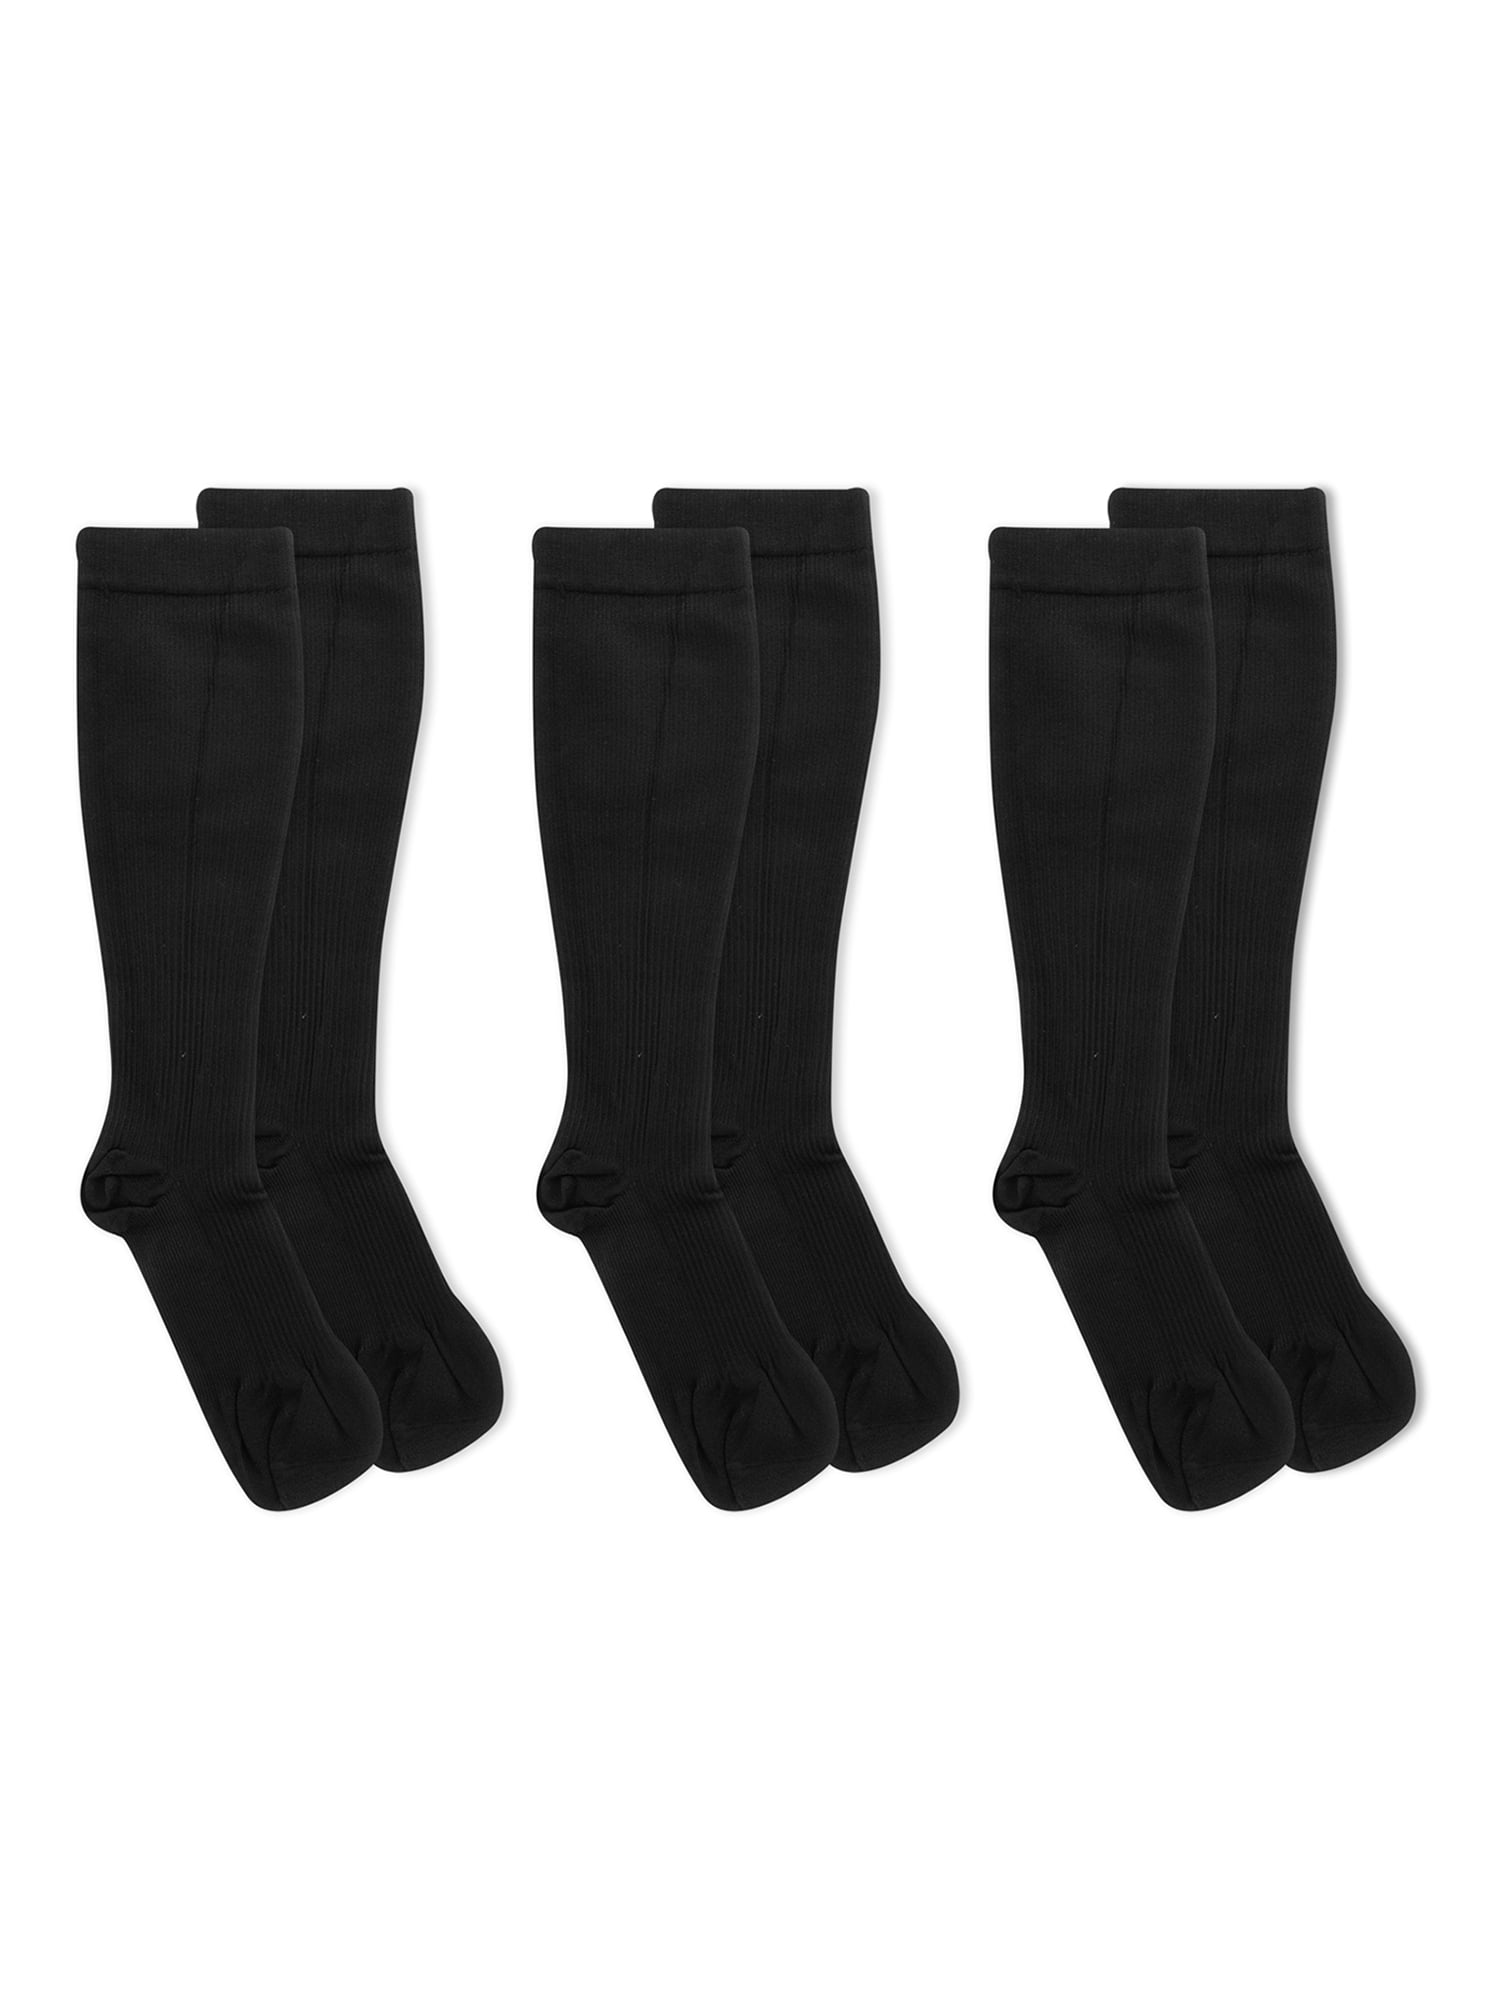 Dr. Scholl's Women's Travel Compression Knee High Socks 3 Pack ...